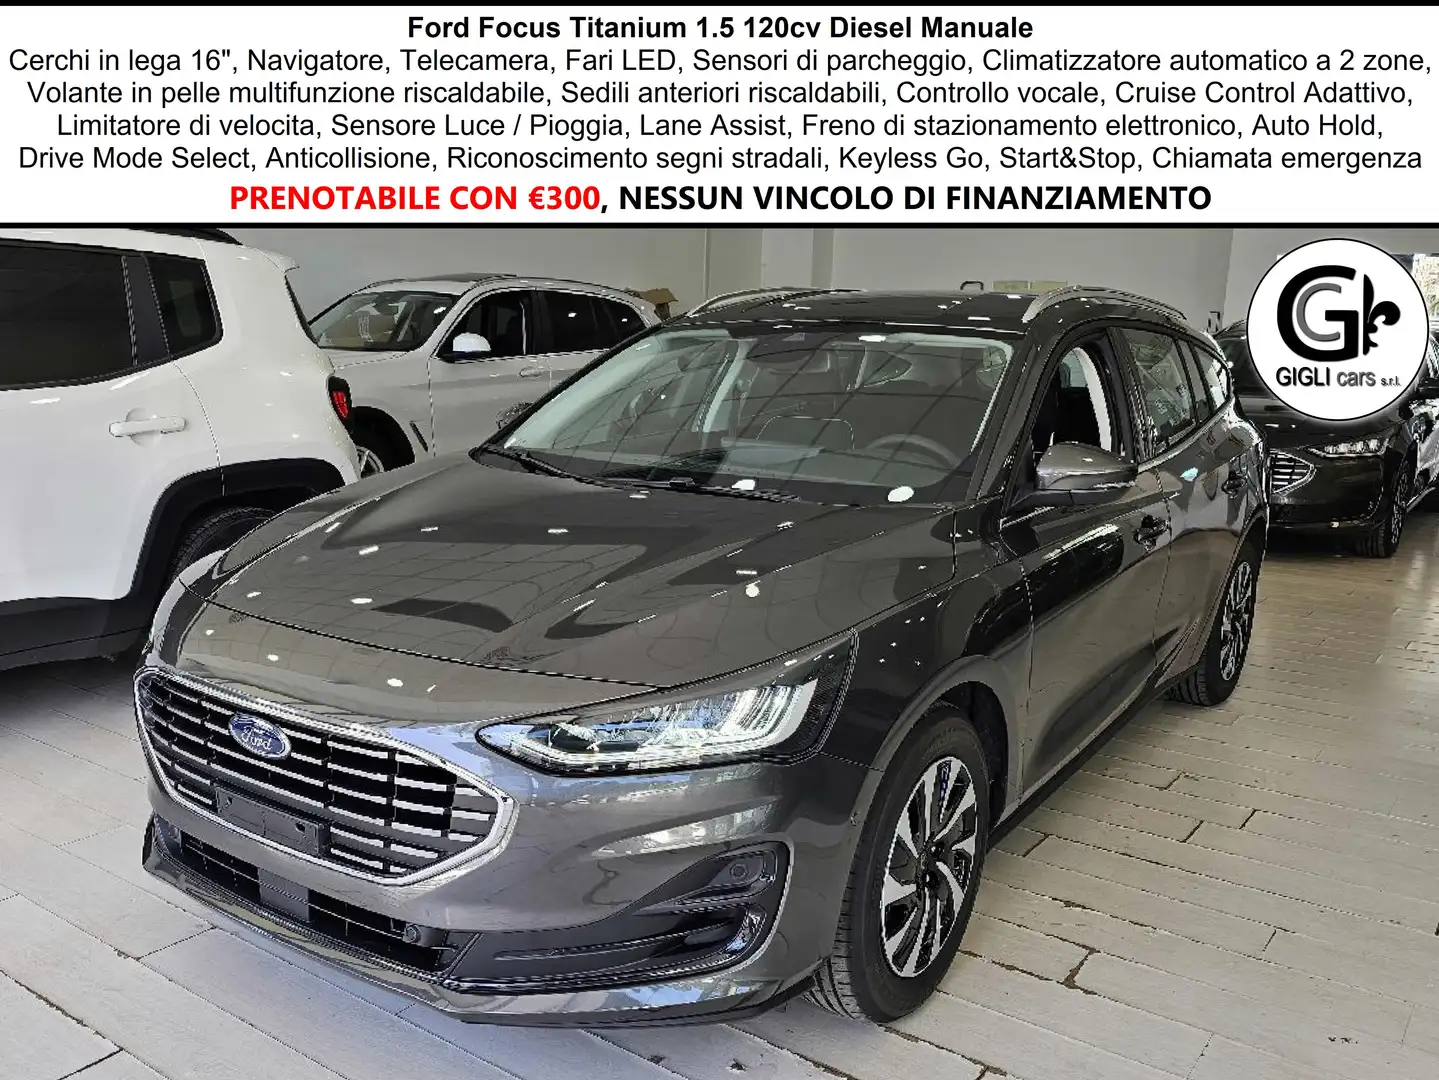 km0 Ford Focus Station wagon a Campi Bisenzio - Firenze per € 28.400,-